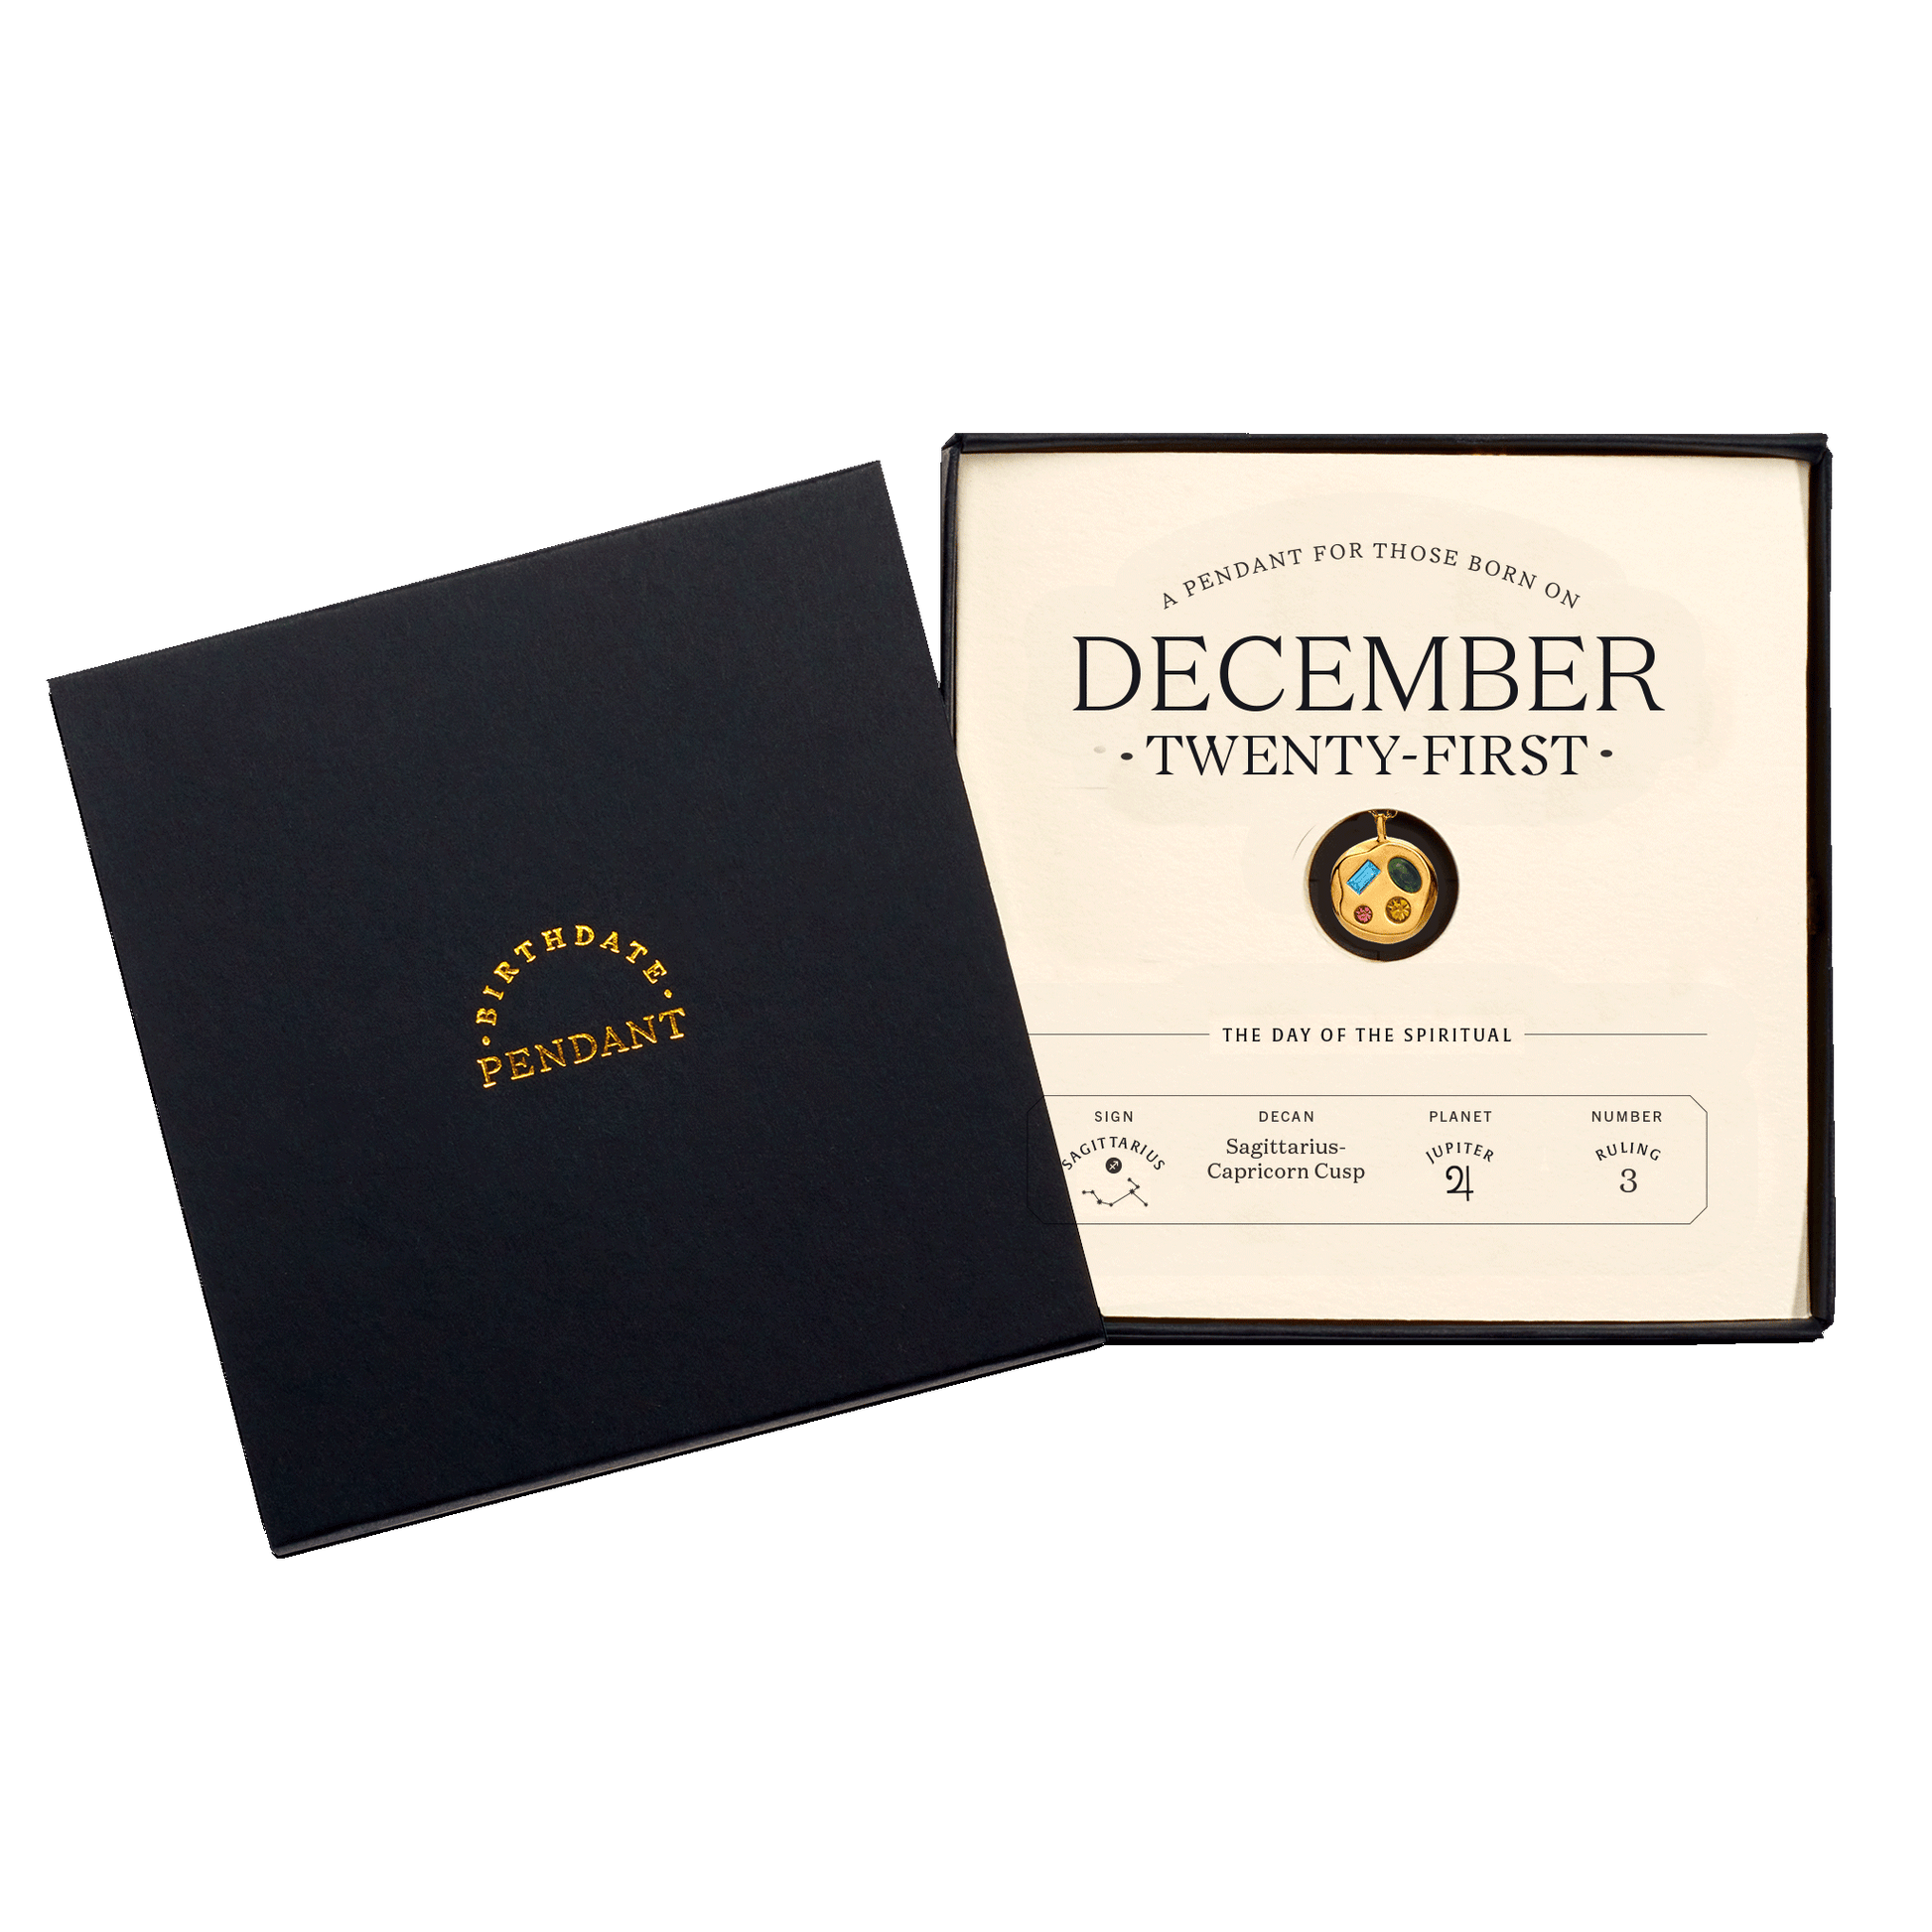 The December Twenty-First Pendant inside its box